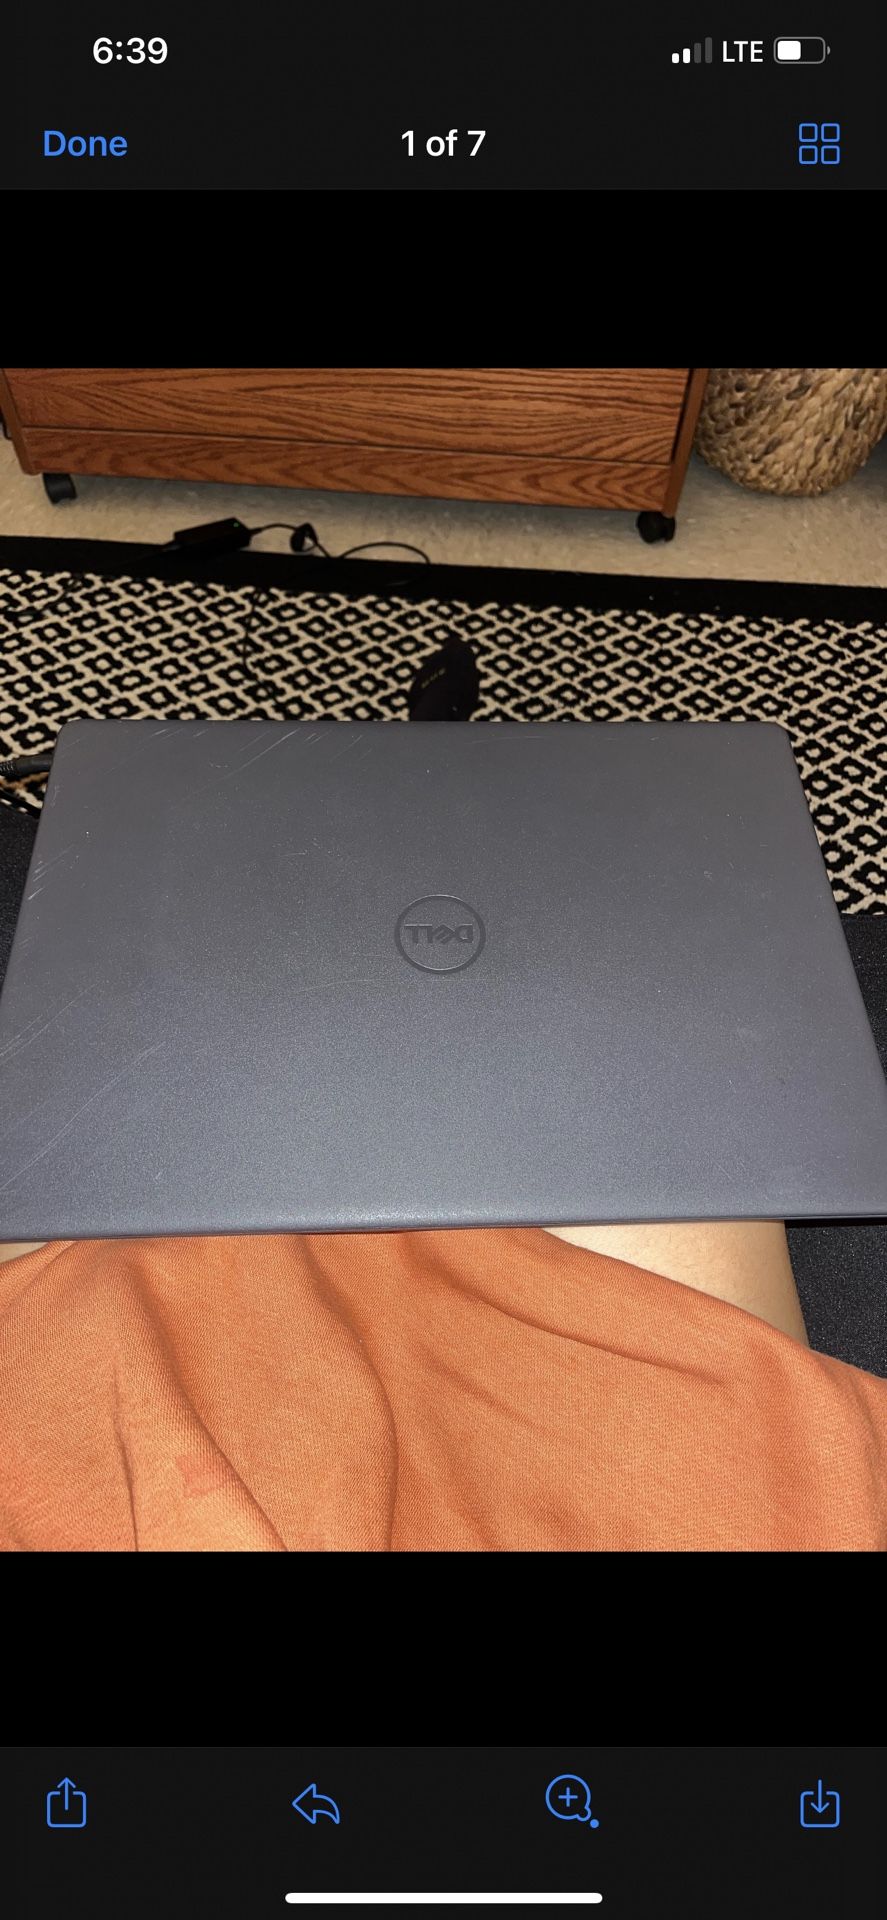 Dell Touchscreen Laptop